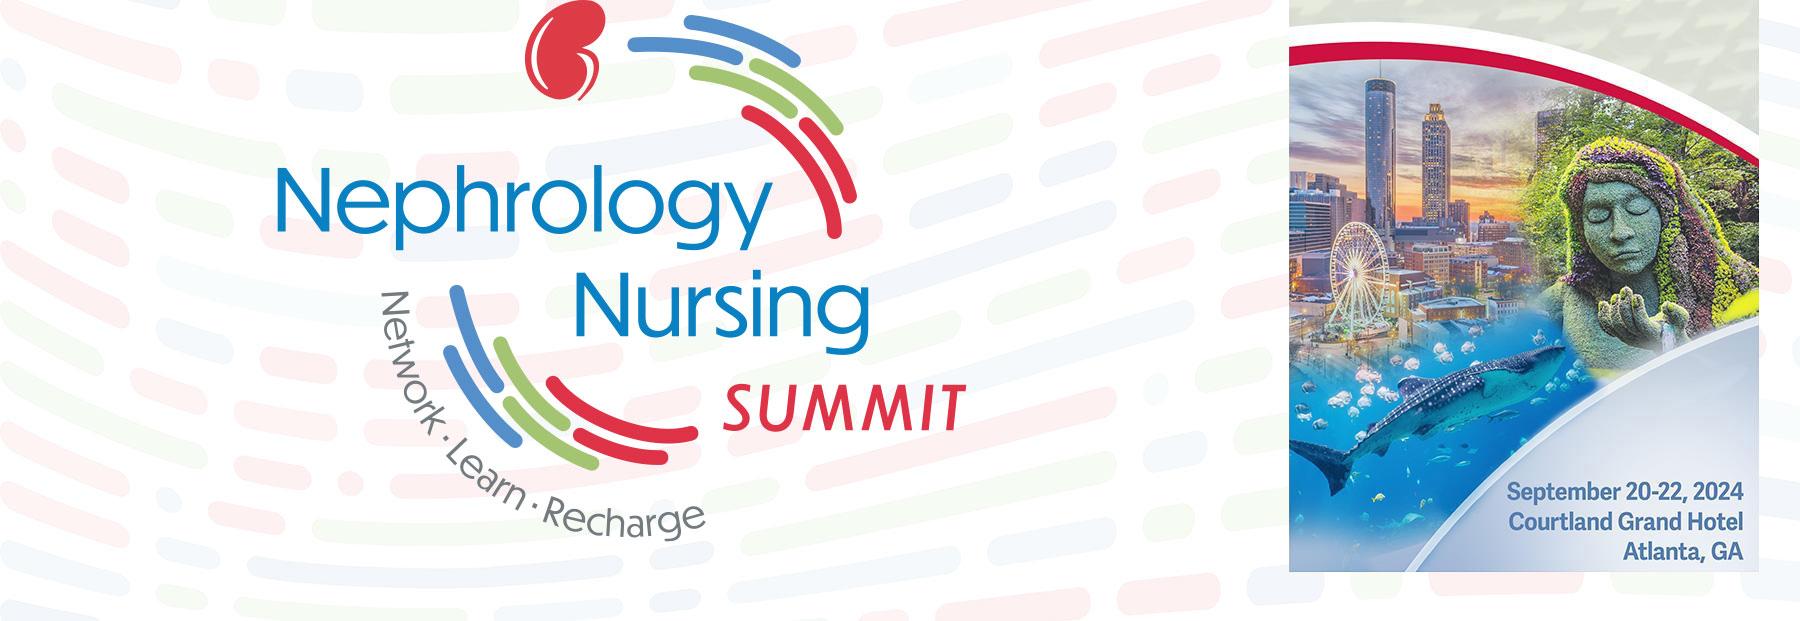 Nephrology Nursing Summit 2024